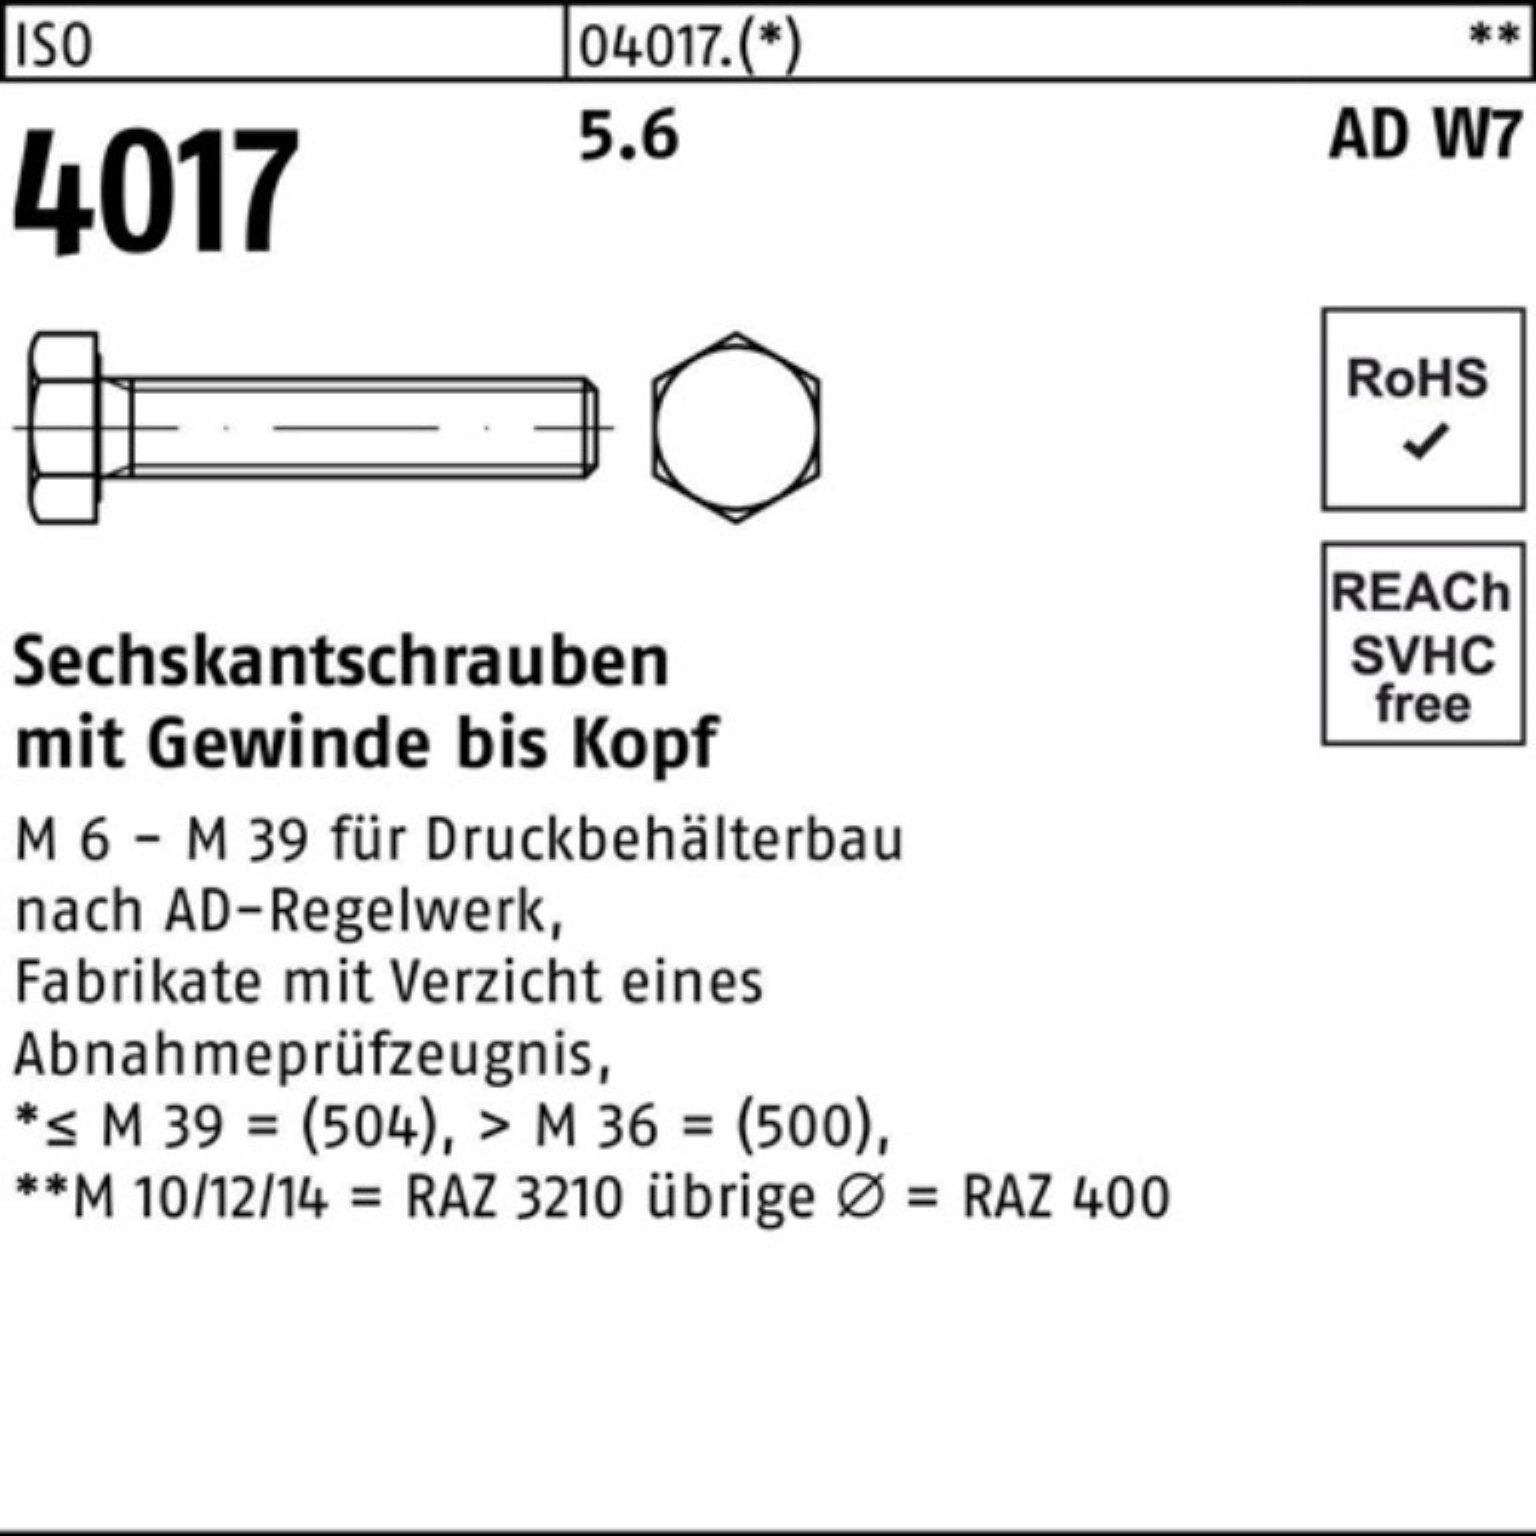 Bufab 70 Sechskantschraube Pack AD VG W7 Stück 100er 25 I ISO Sechskantschraube M20x 5.6 4017